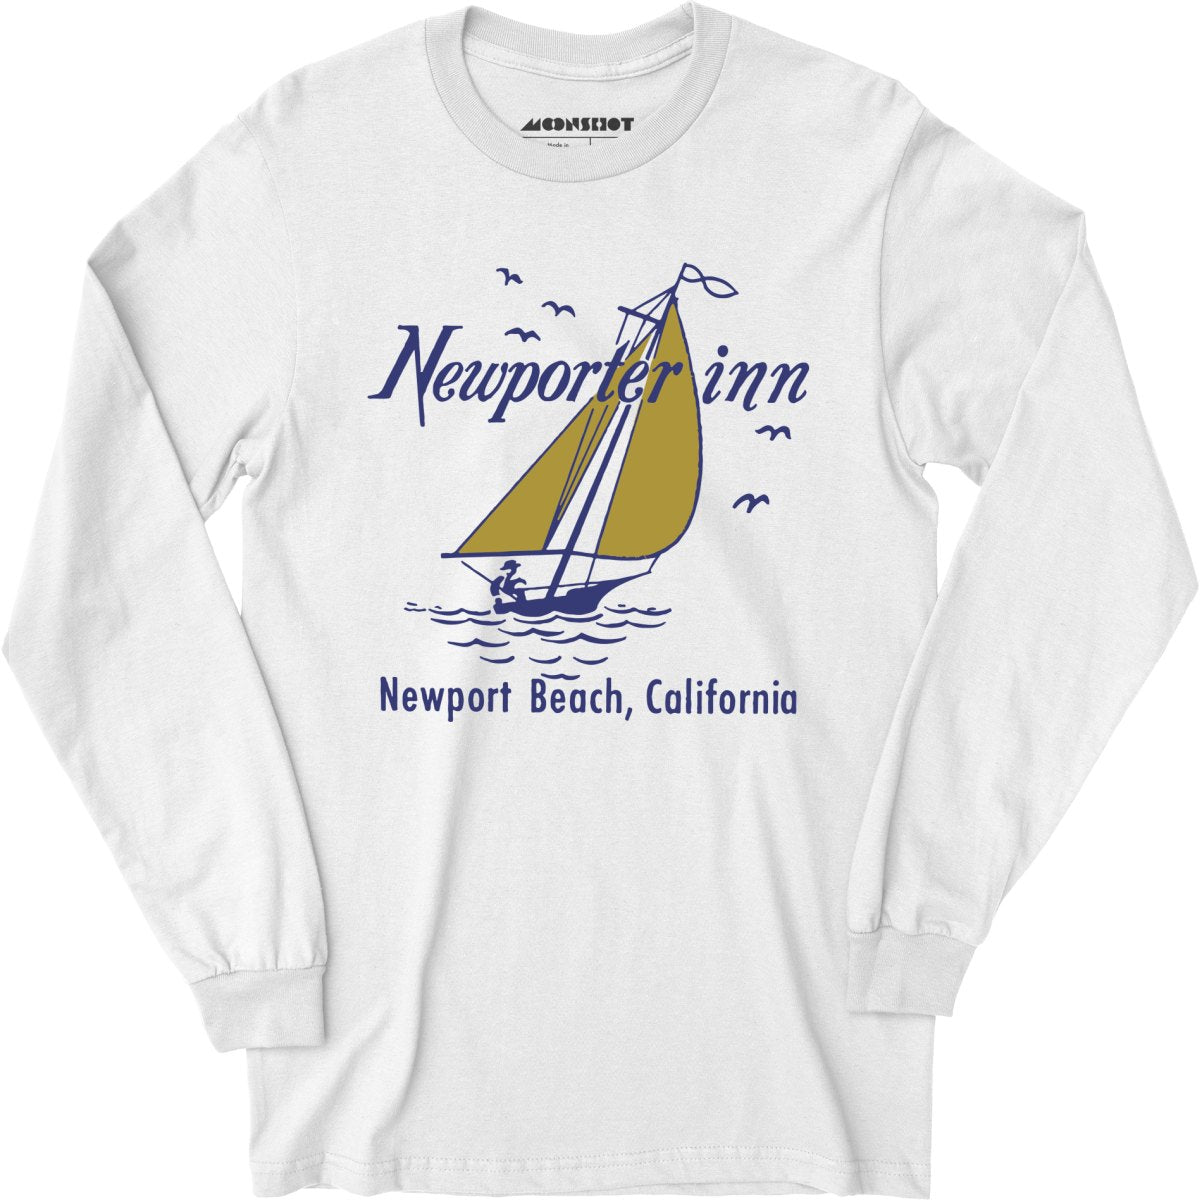 The Newporter Inn v2 - Newport Beach, CA - Vintage Hotel - Long Sleeve T-Shirt